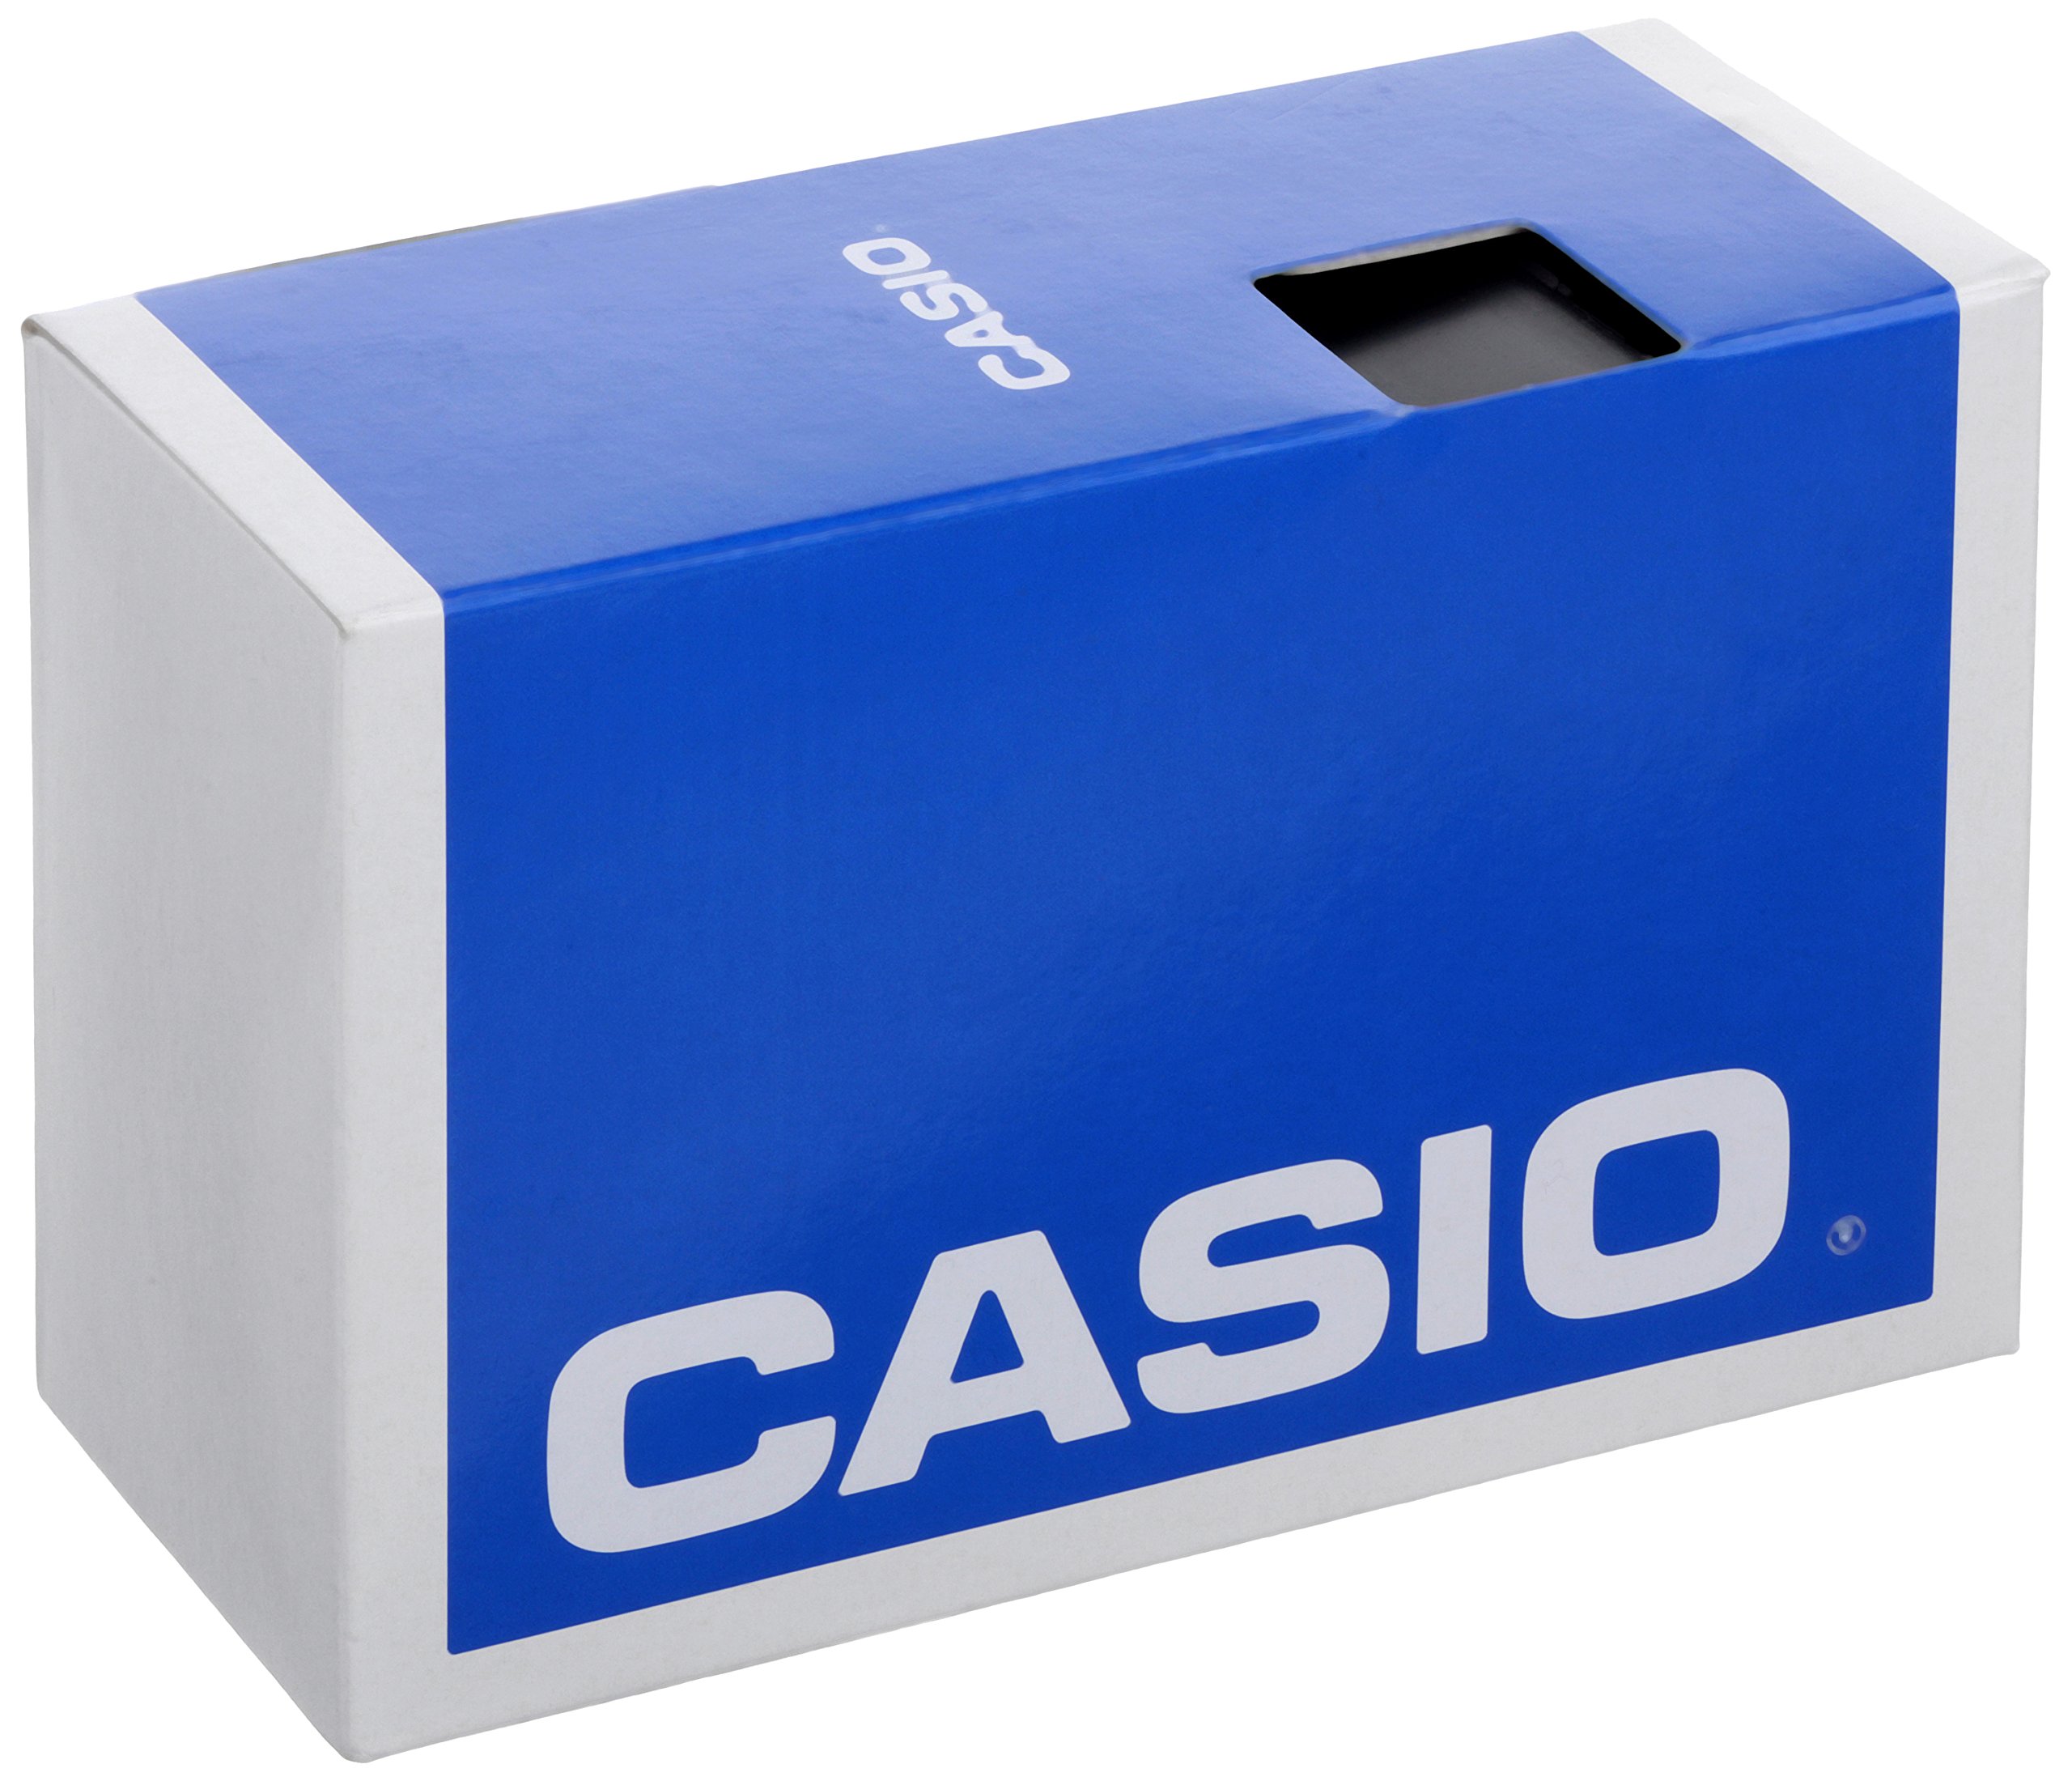 Casio Men's MCW100H Heavy Duty Design Watch